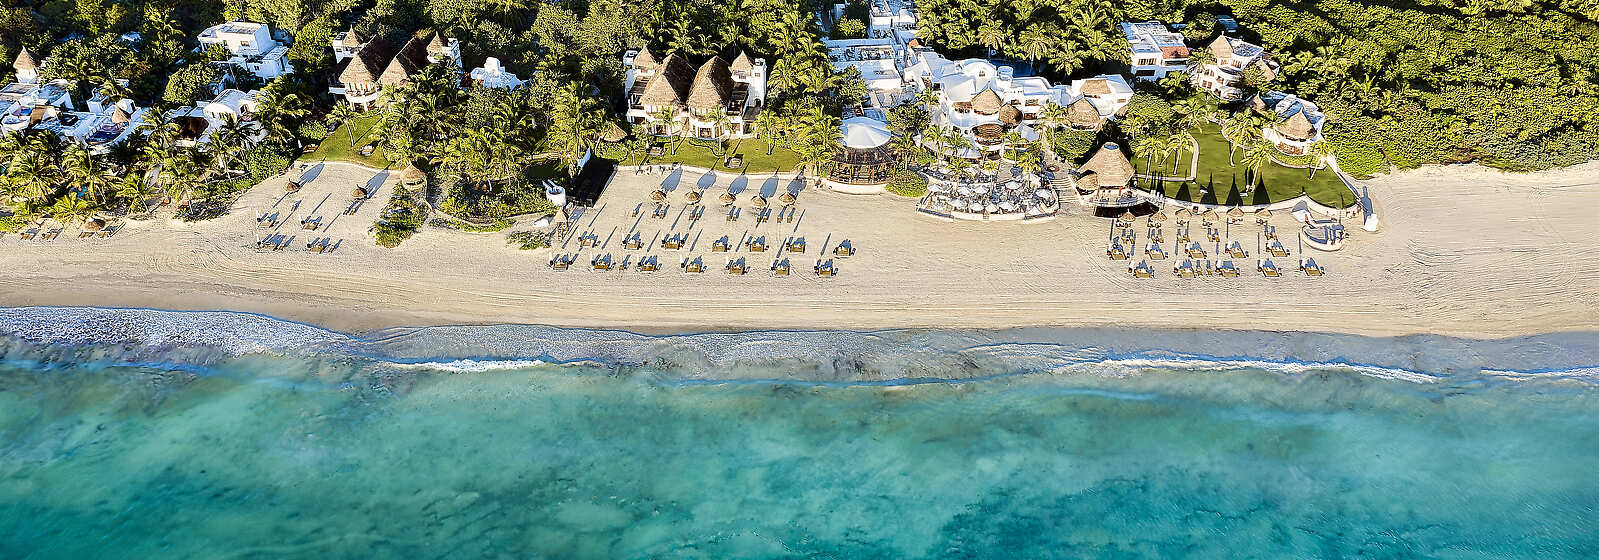 Belmond Maroma Resort – Playa Del Carmen - Travel By Hart